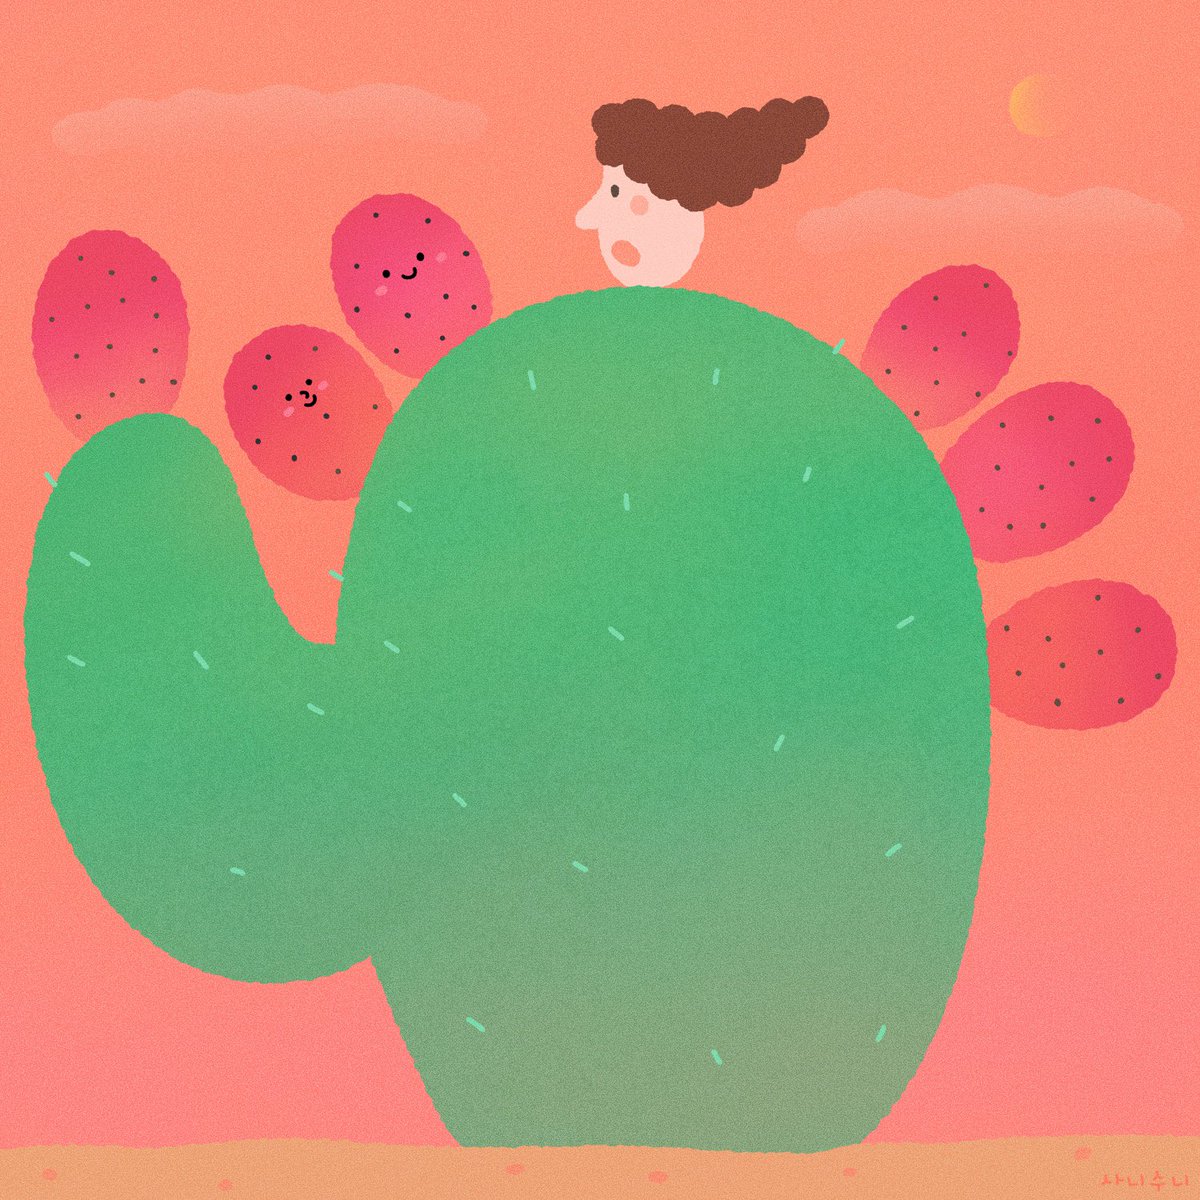 cactus fruit
#illustration #illustrator #cactus #cactusfruit #fruit #digitalart #digitalpainting #drawing #doodle #일러스트 #イラスト